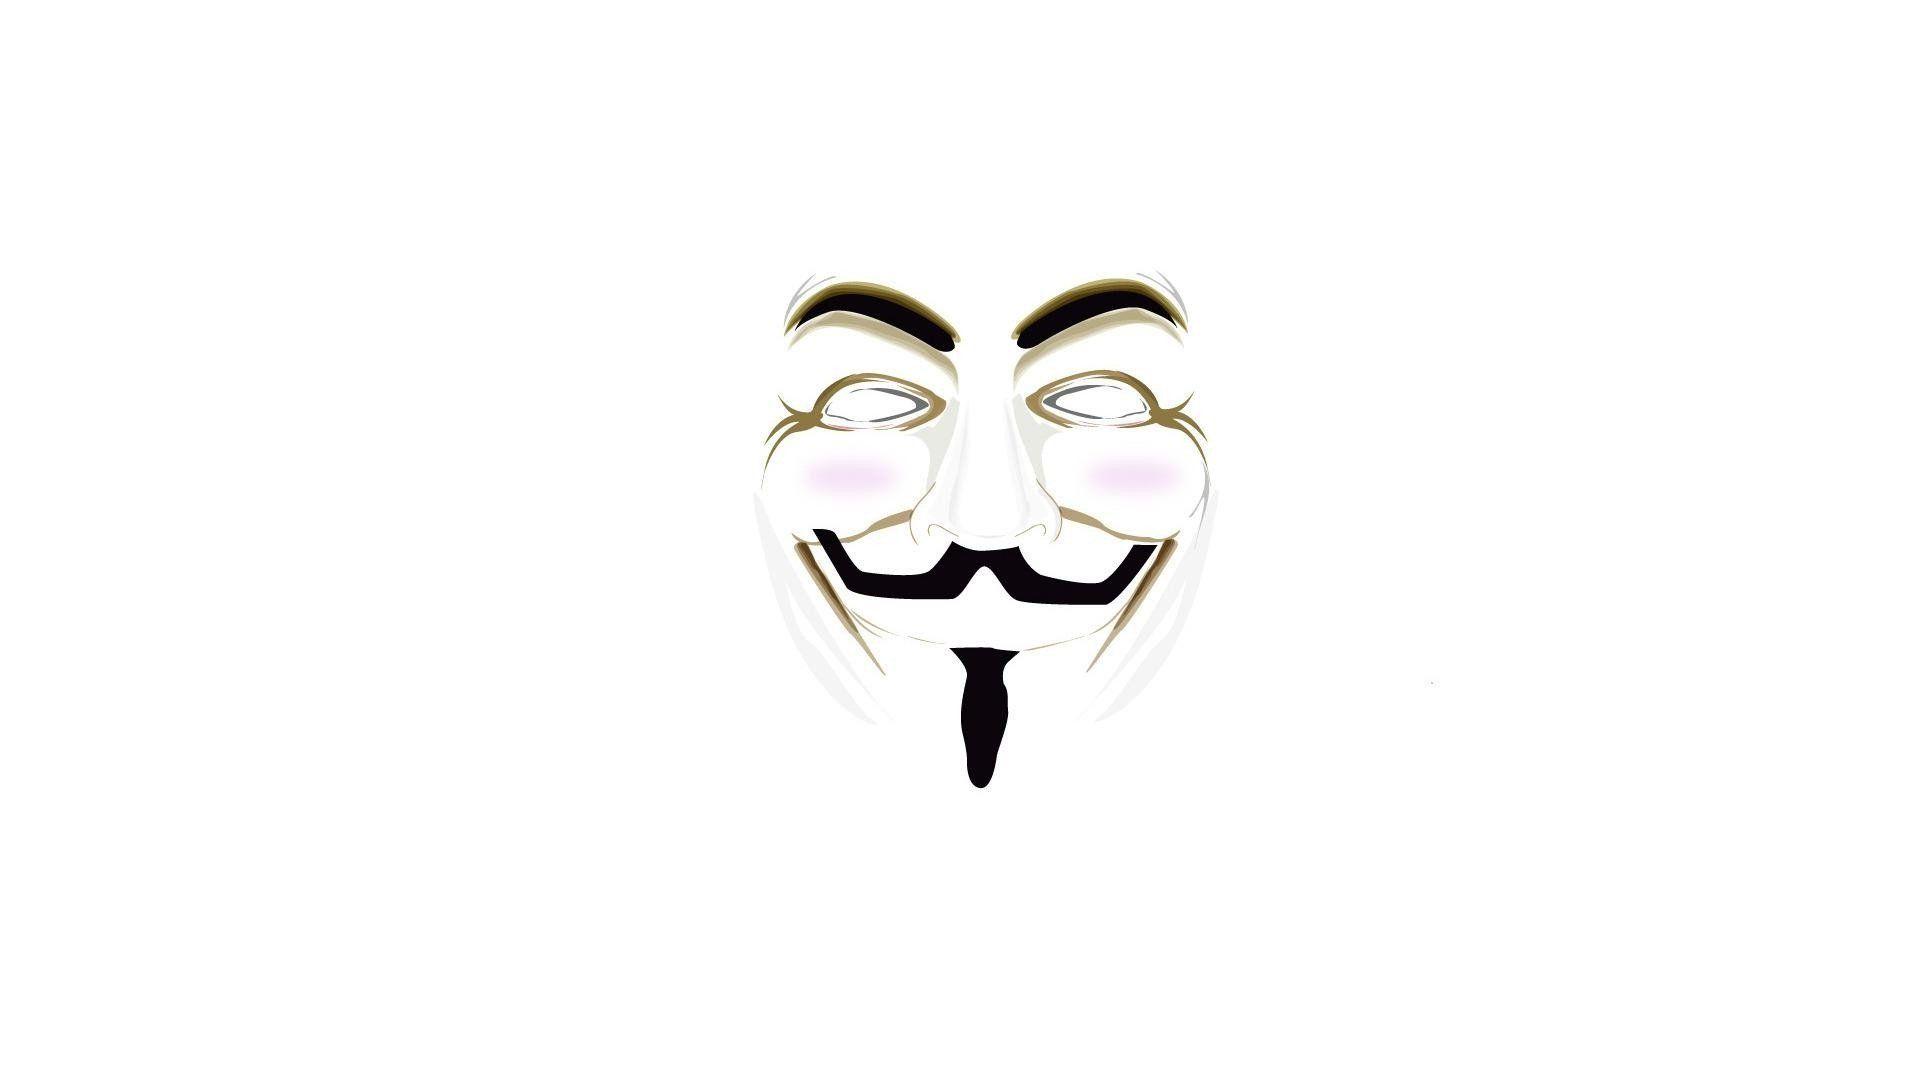 HD wallpaper: Hackers Organisation, vendetta folk mask and hat